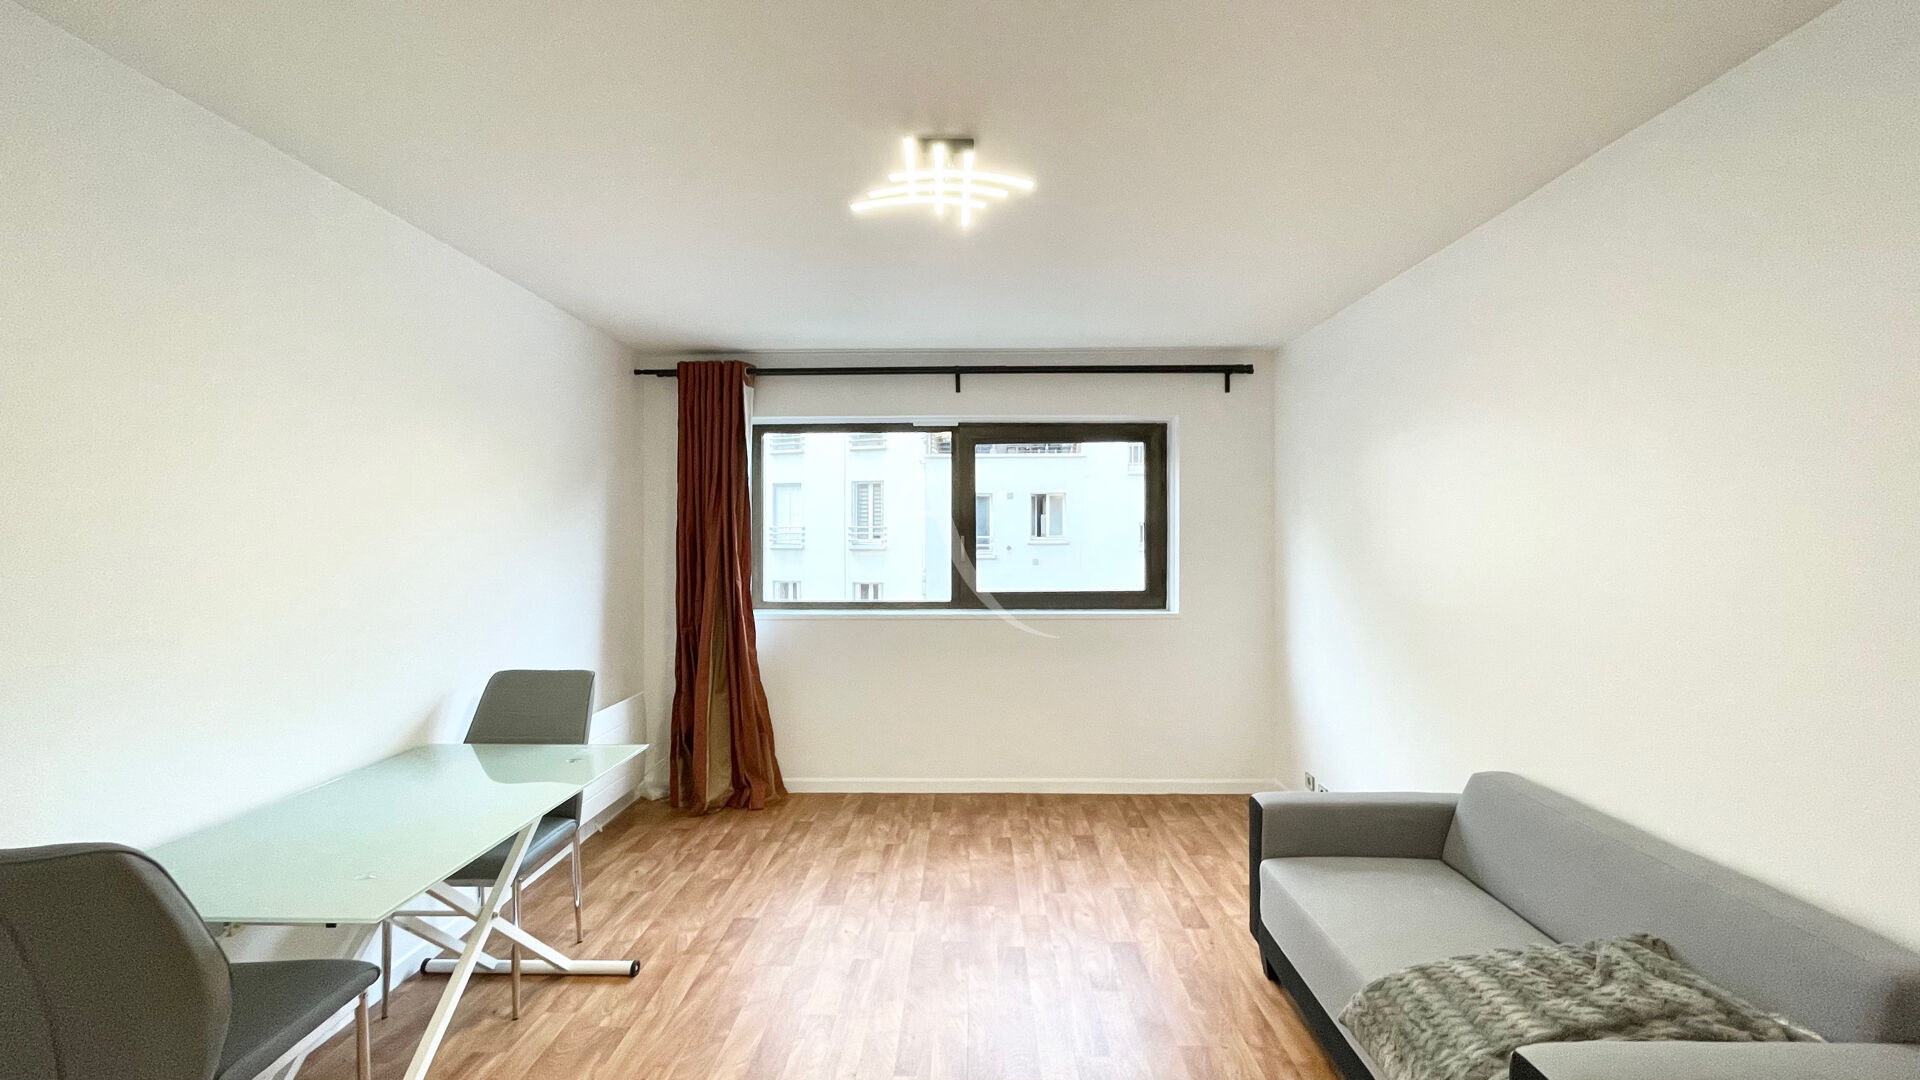 Appartement a louer neuilly-sur-seine - 1 pièce(s) - 33 m2 - Surfyn